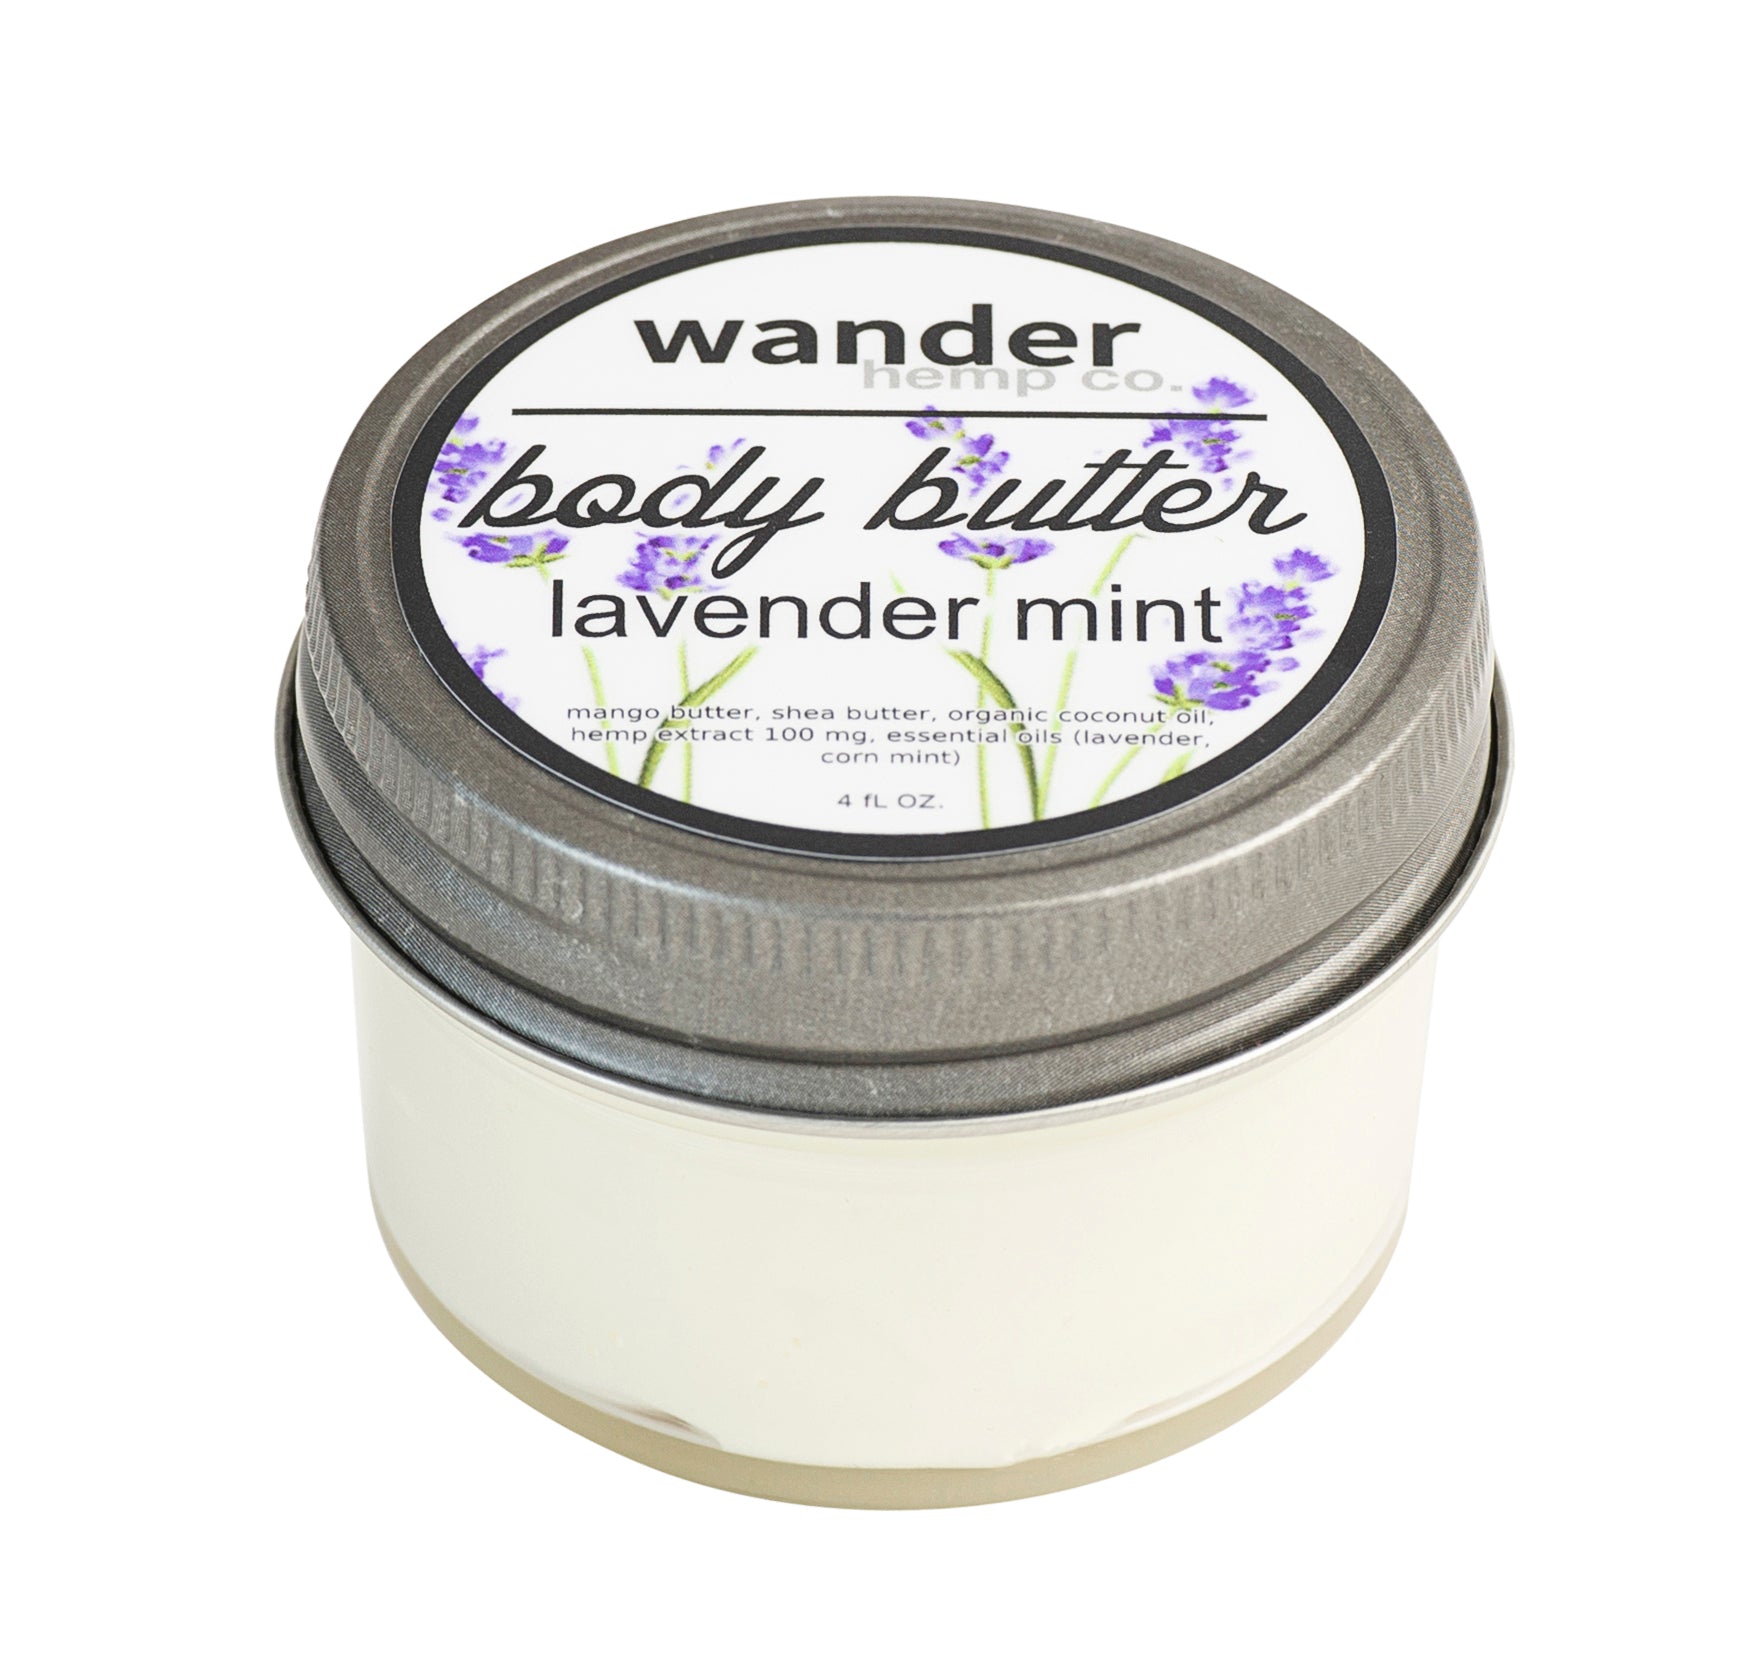 Body Butter - lavender mint